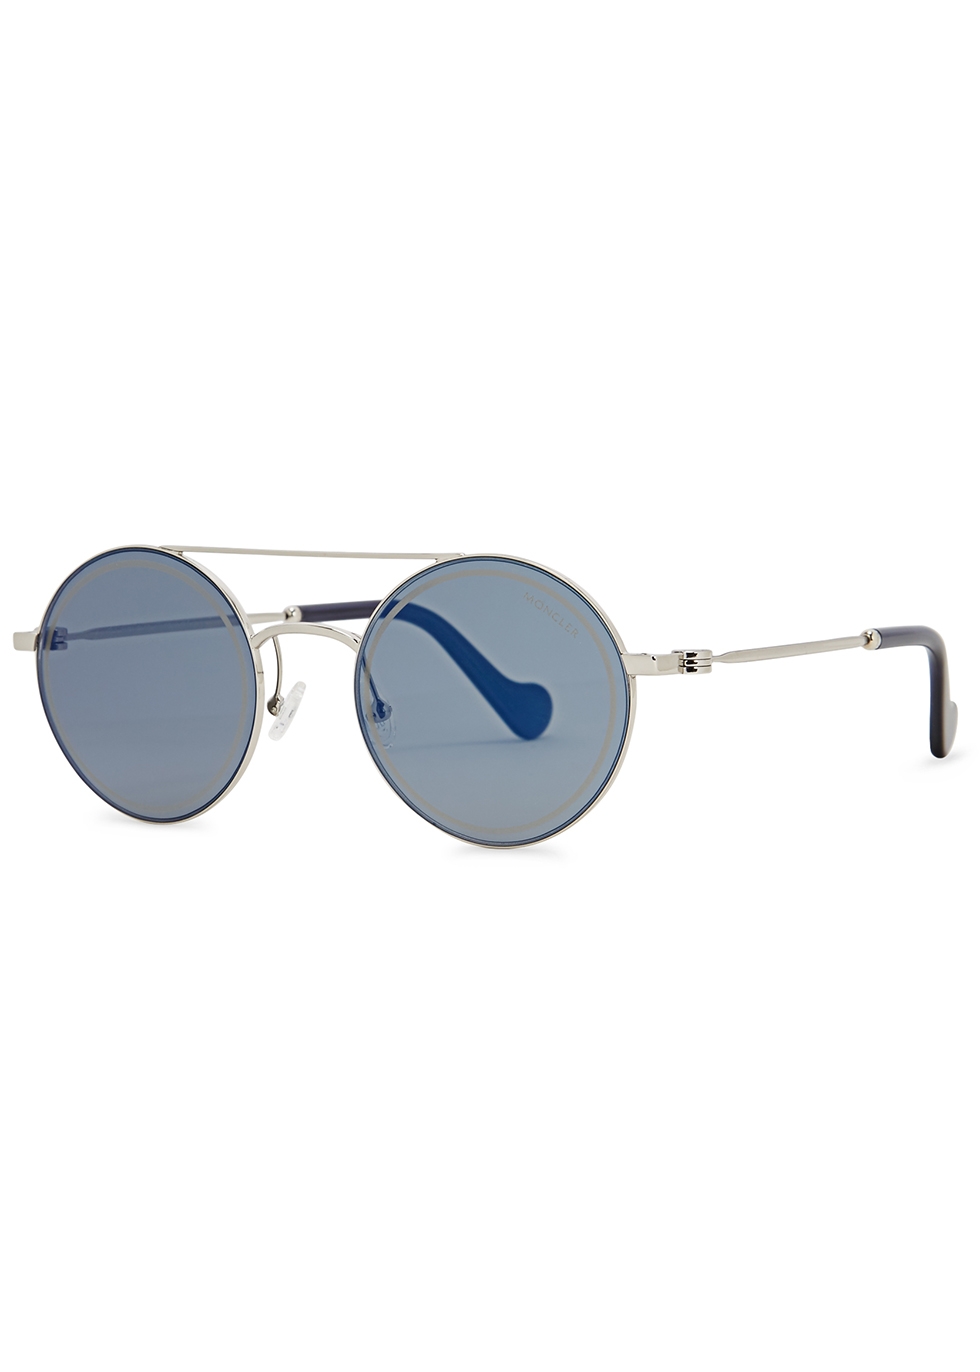 moncler round sunglasses